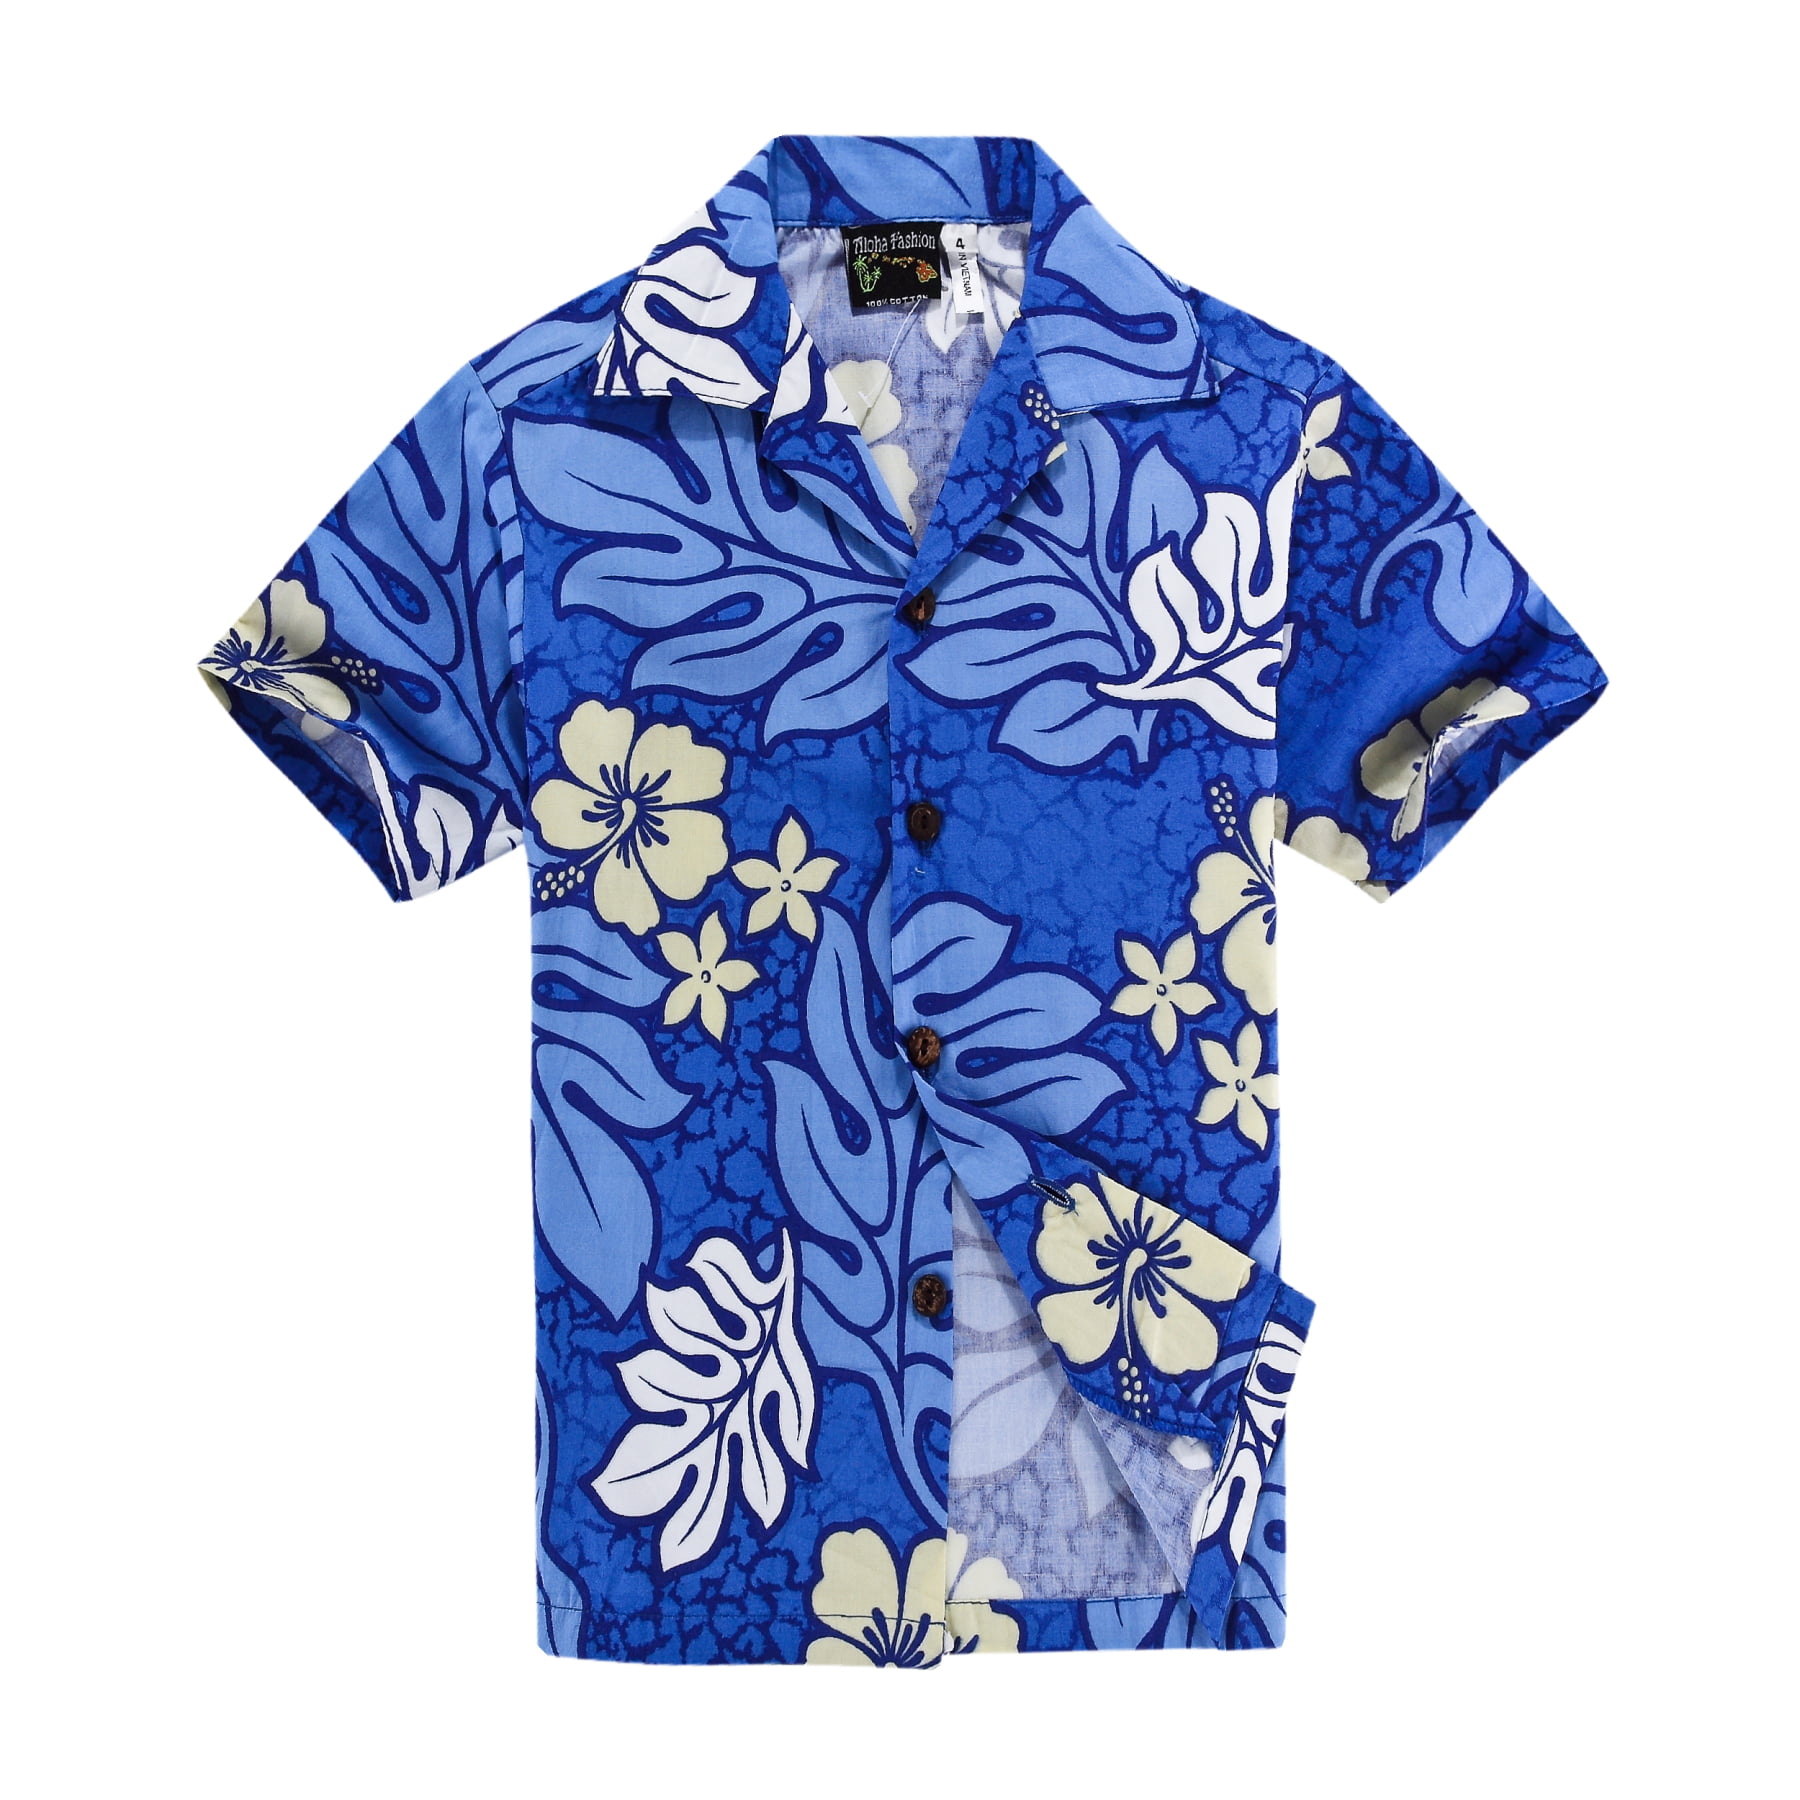  Hawaii  Hangover Hawaiian Shirt  Aloha Shirt  in Blue with 